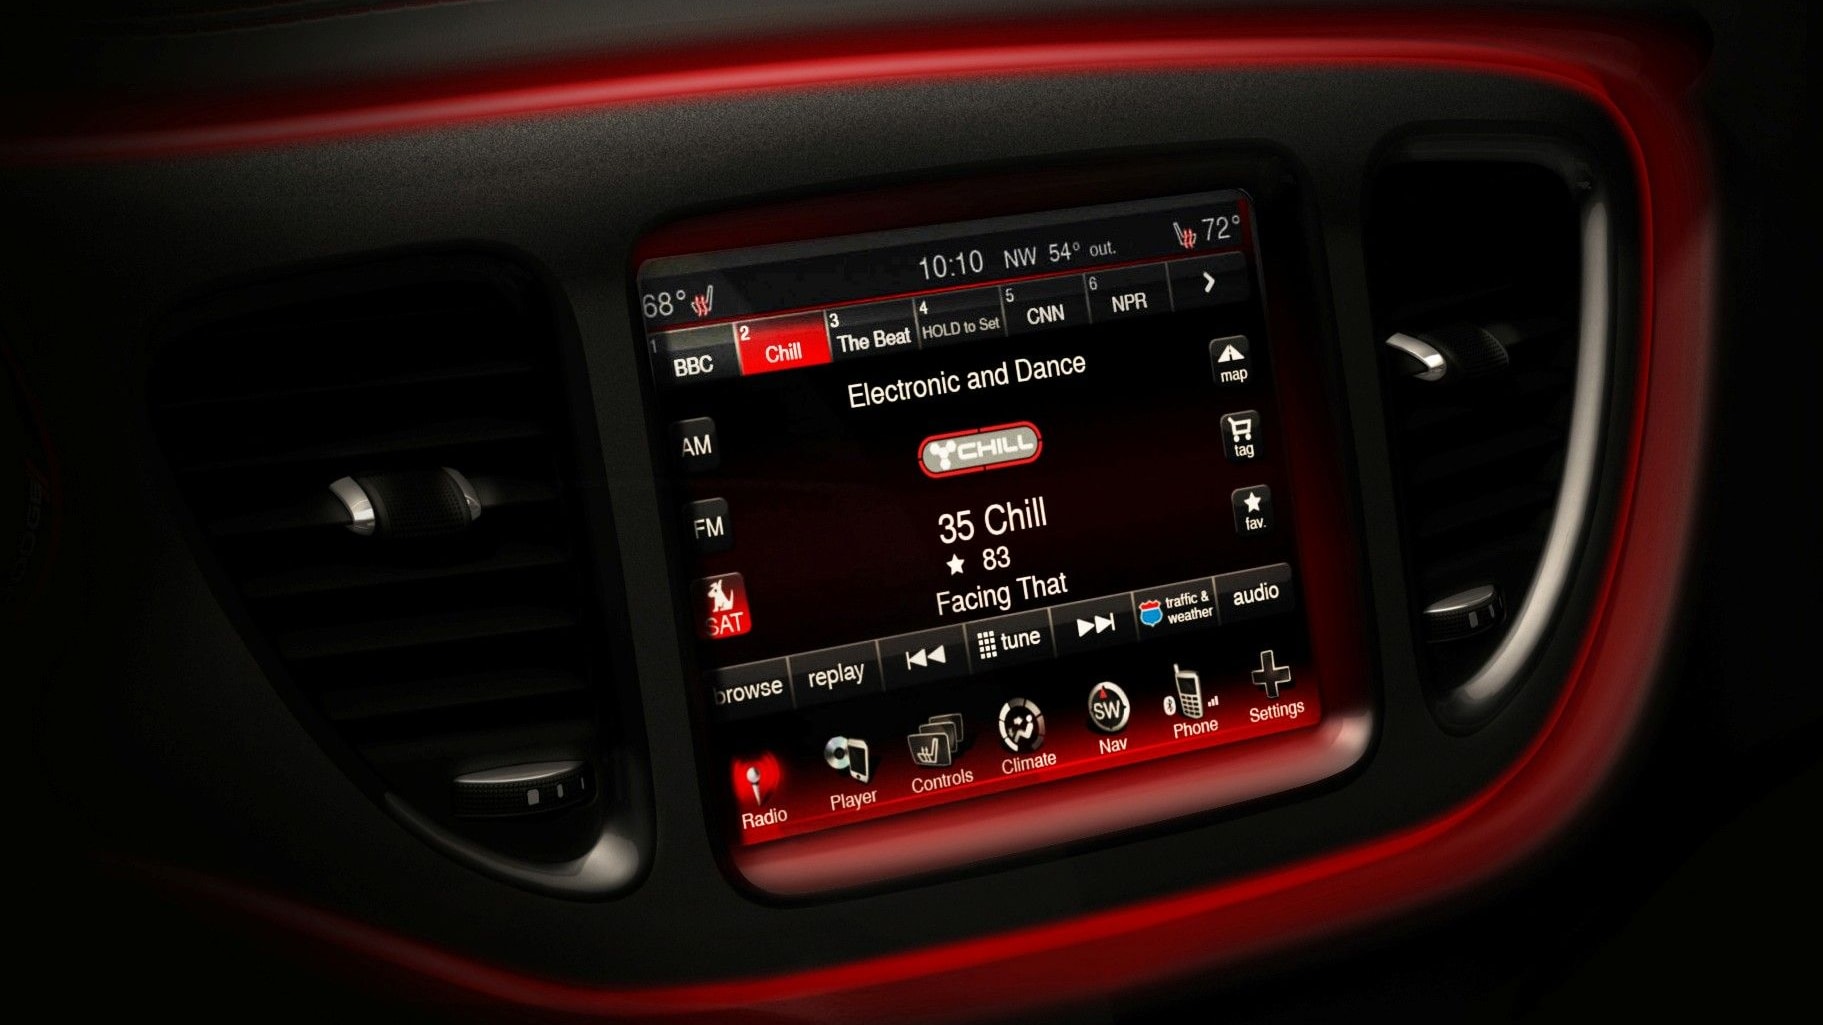 2013 Dodge Dart interior teasers